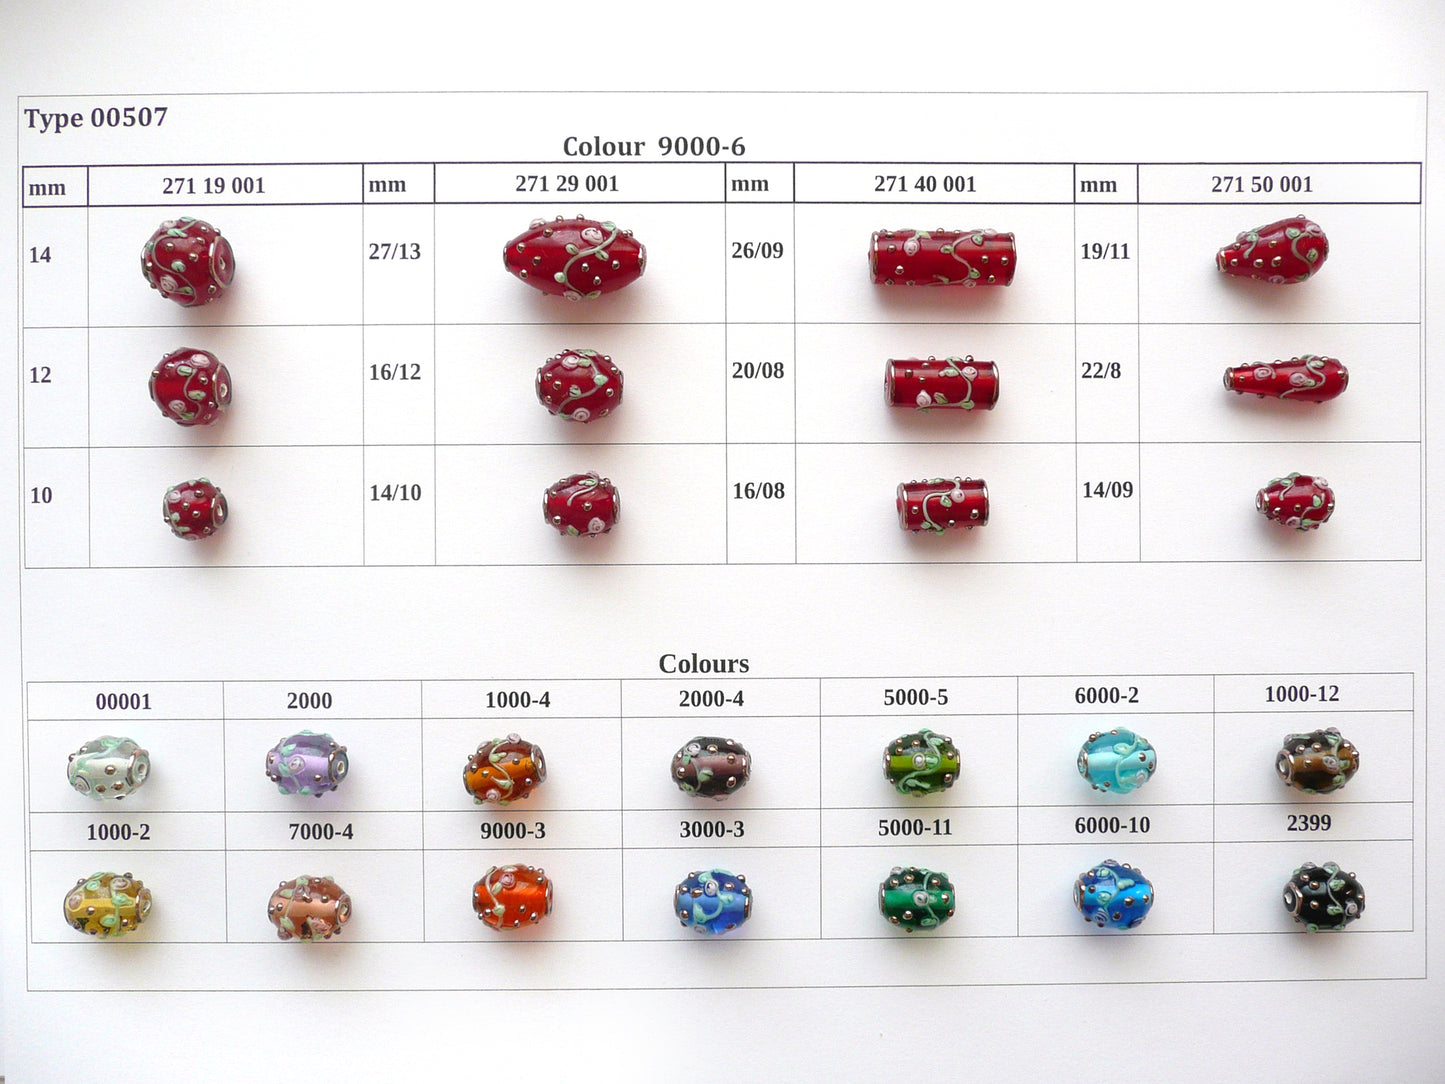 30 pcs Lampwork Beads 507 / Teardrop/Pear (271-50-001), Handmade, Preciosa Glass, Czech Republic